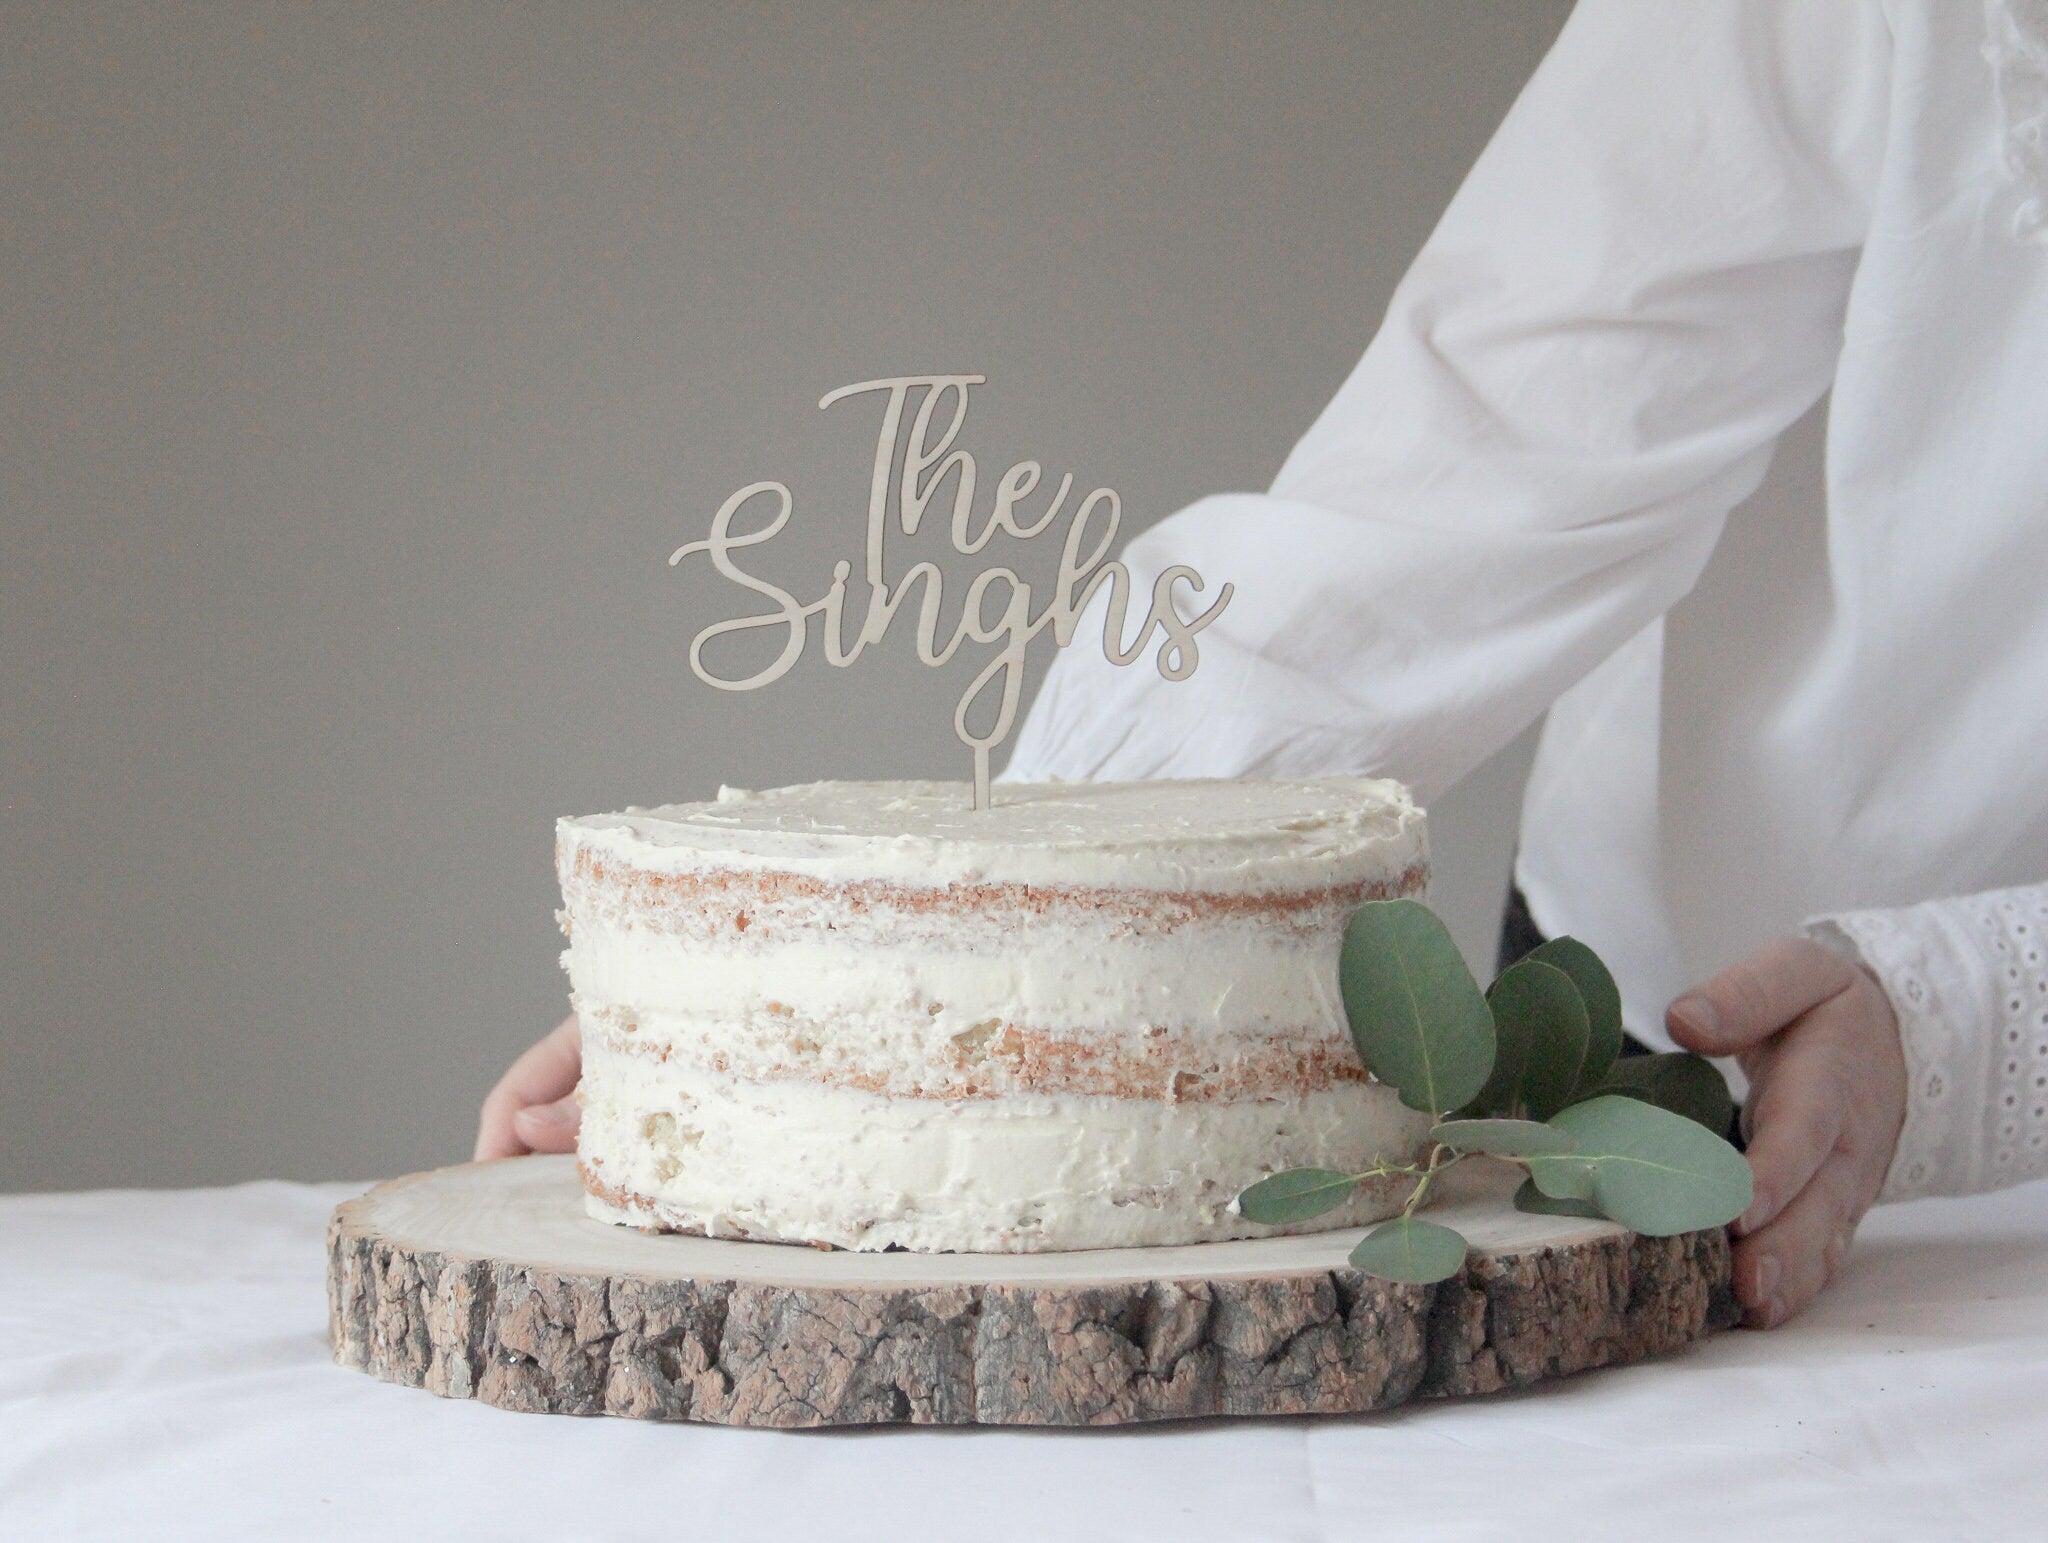 Surname Wedding Cake Topper, Minimal Wedding Topper